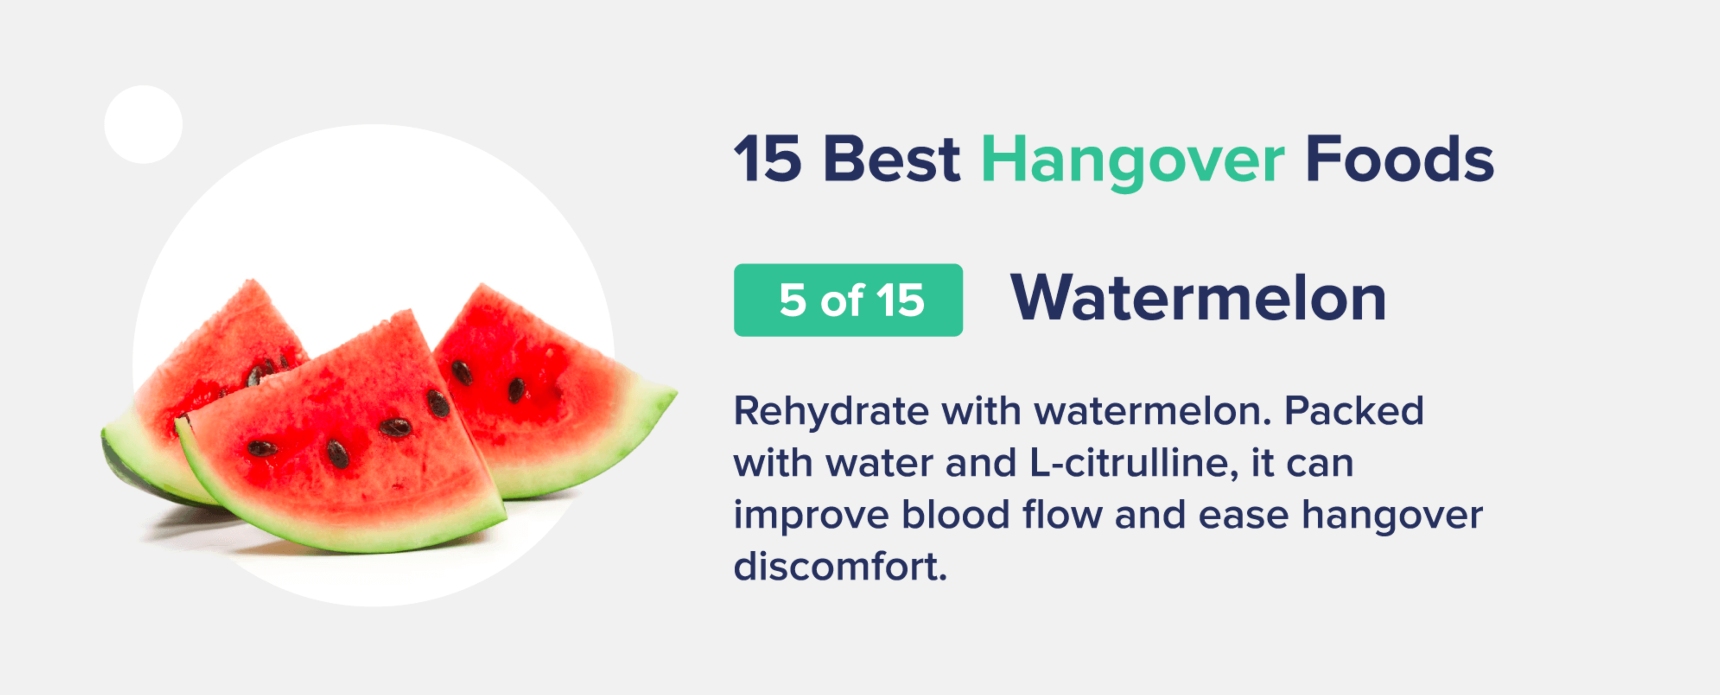 watermelon best hangover foods